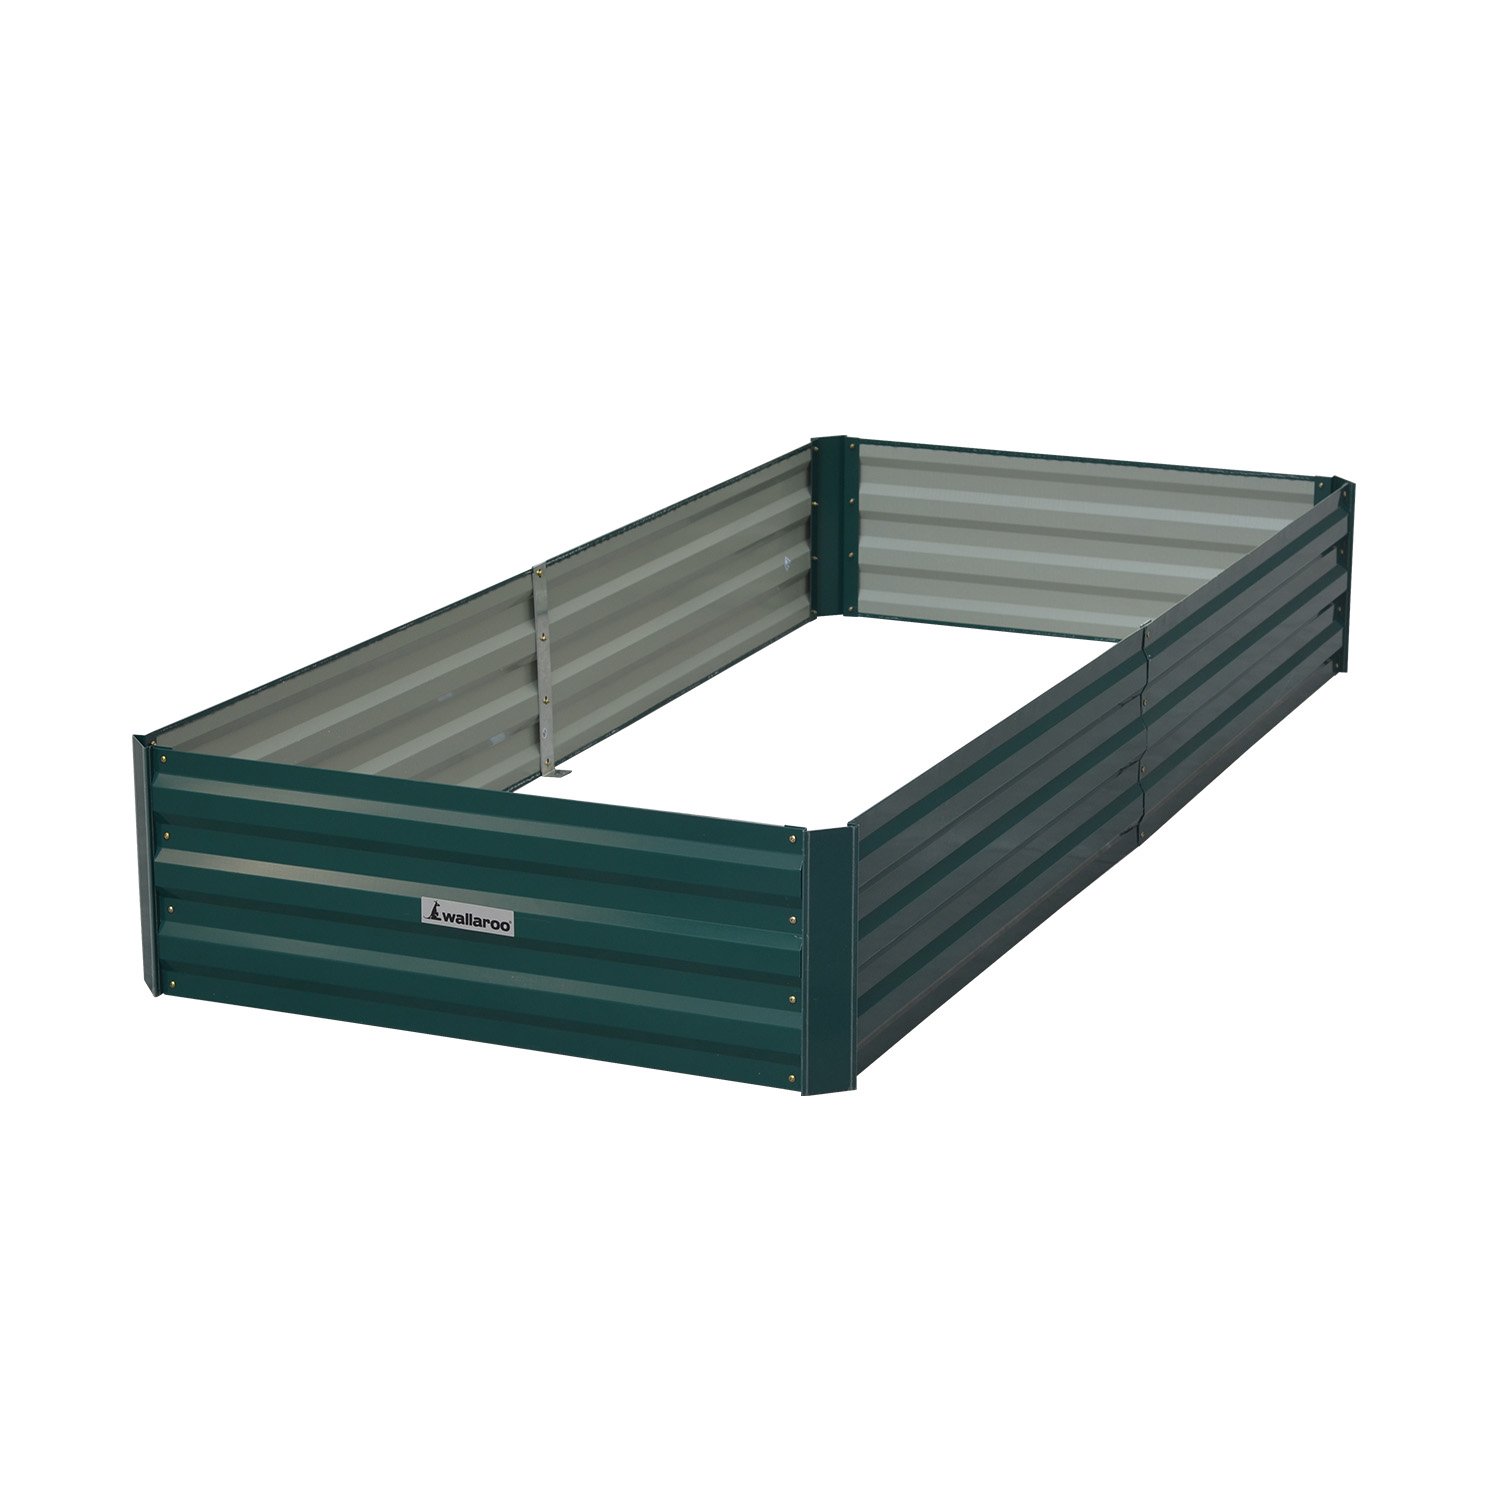 Wallaroo Garden Bed 210 x 90 x 30cm Galvanized Steel - Green 1